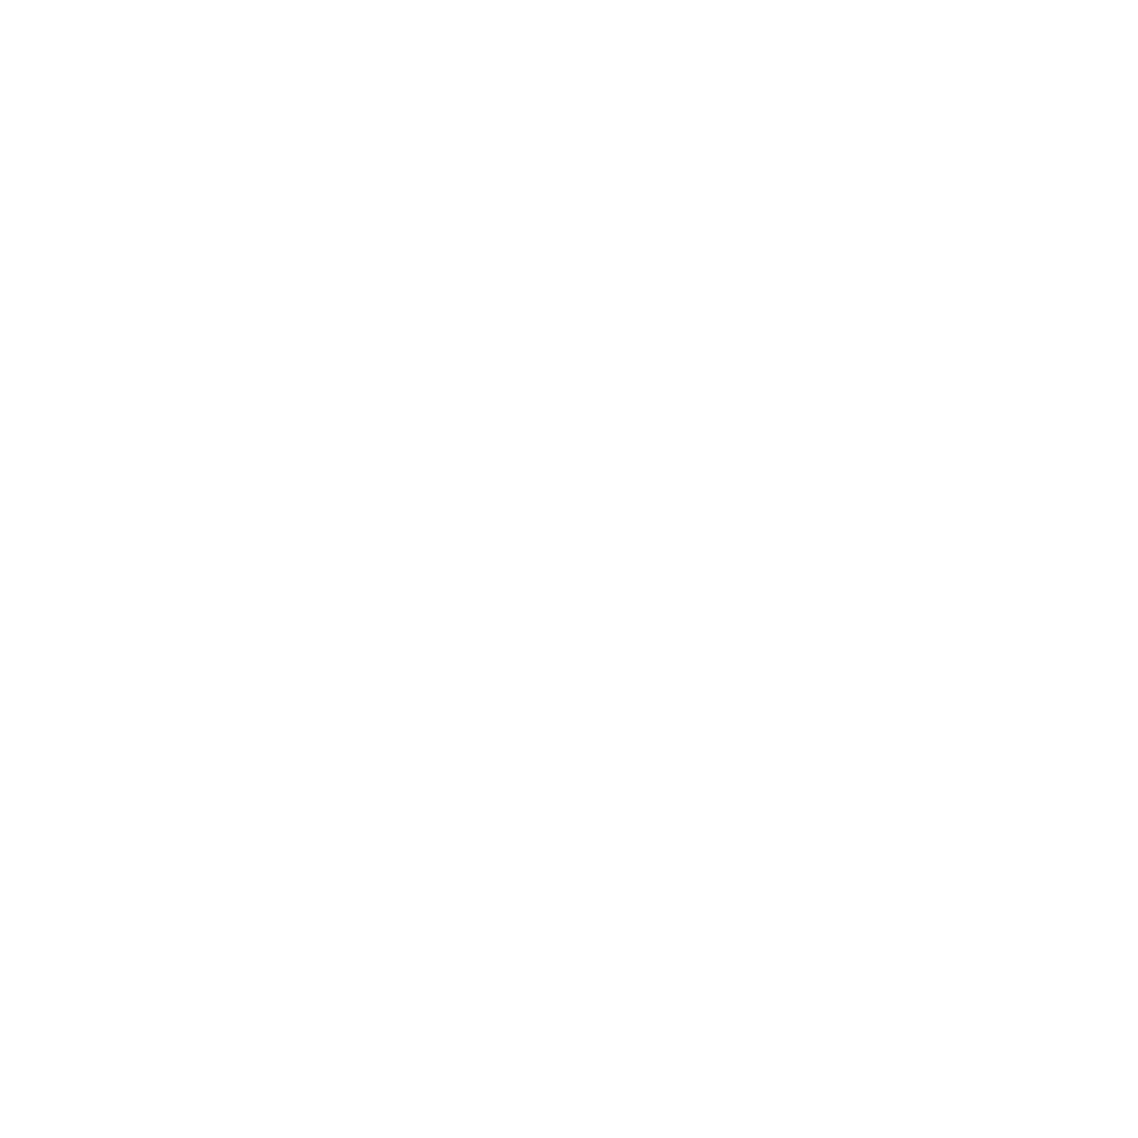 Geneva Jones & Associates - Logo